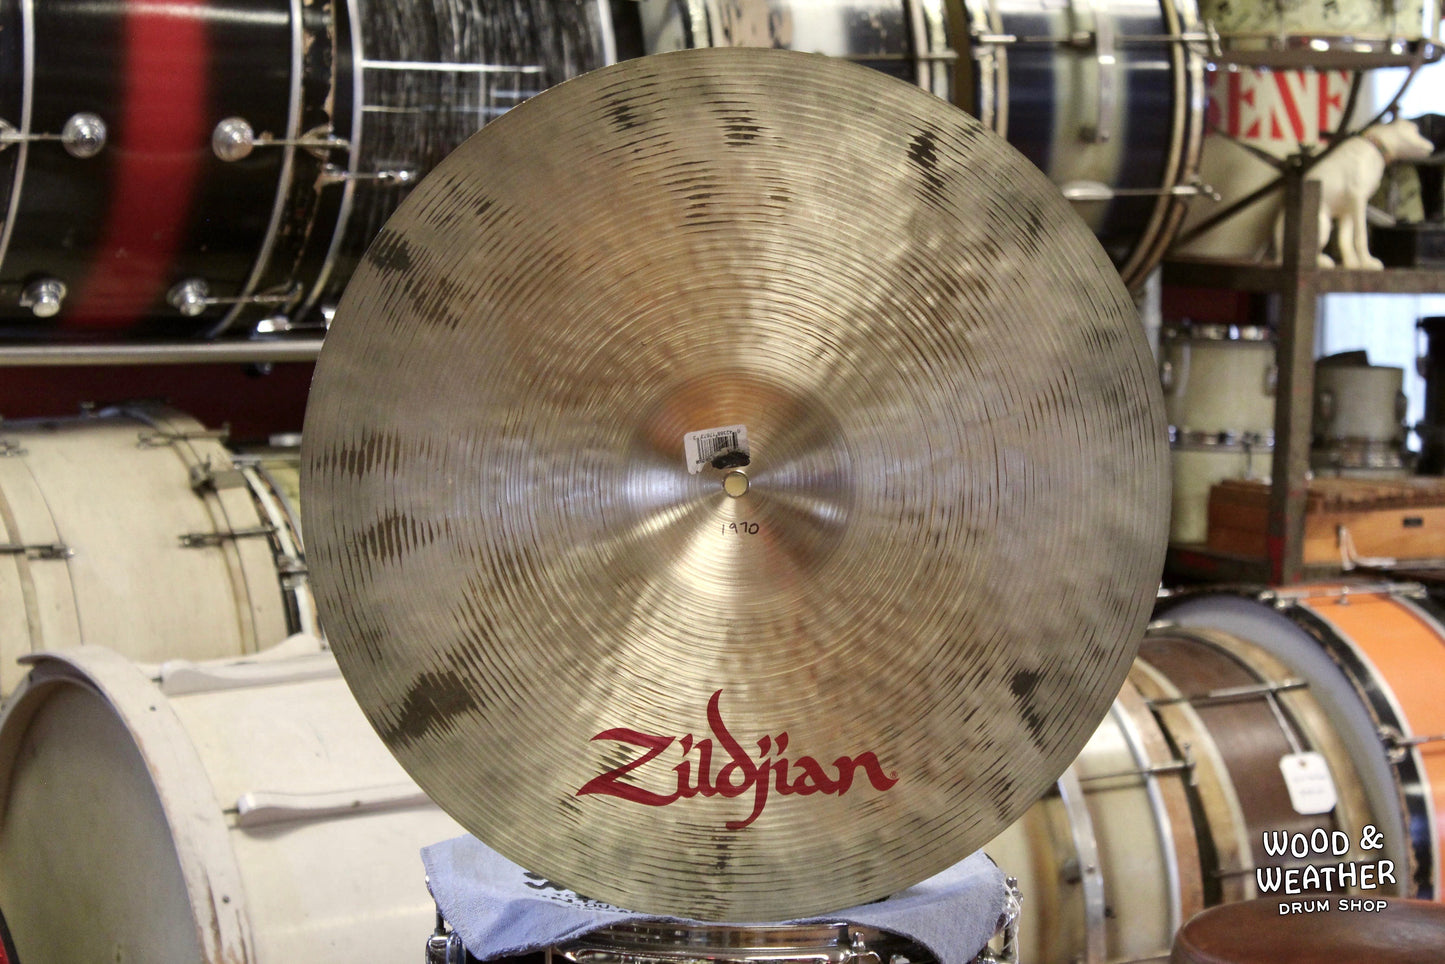 Used Zildjian 20" Oriental Crash of Doom Cymbal 1970g